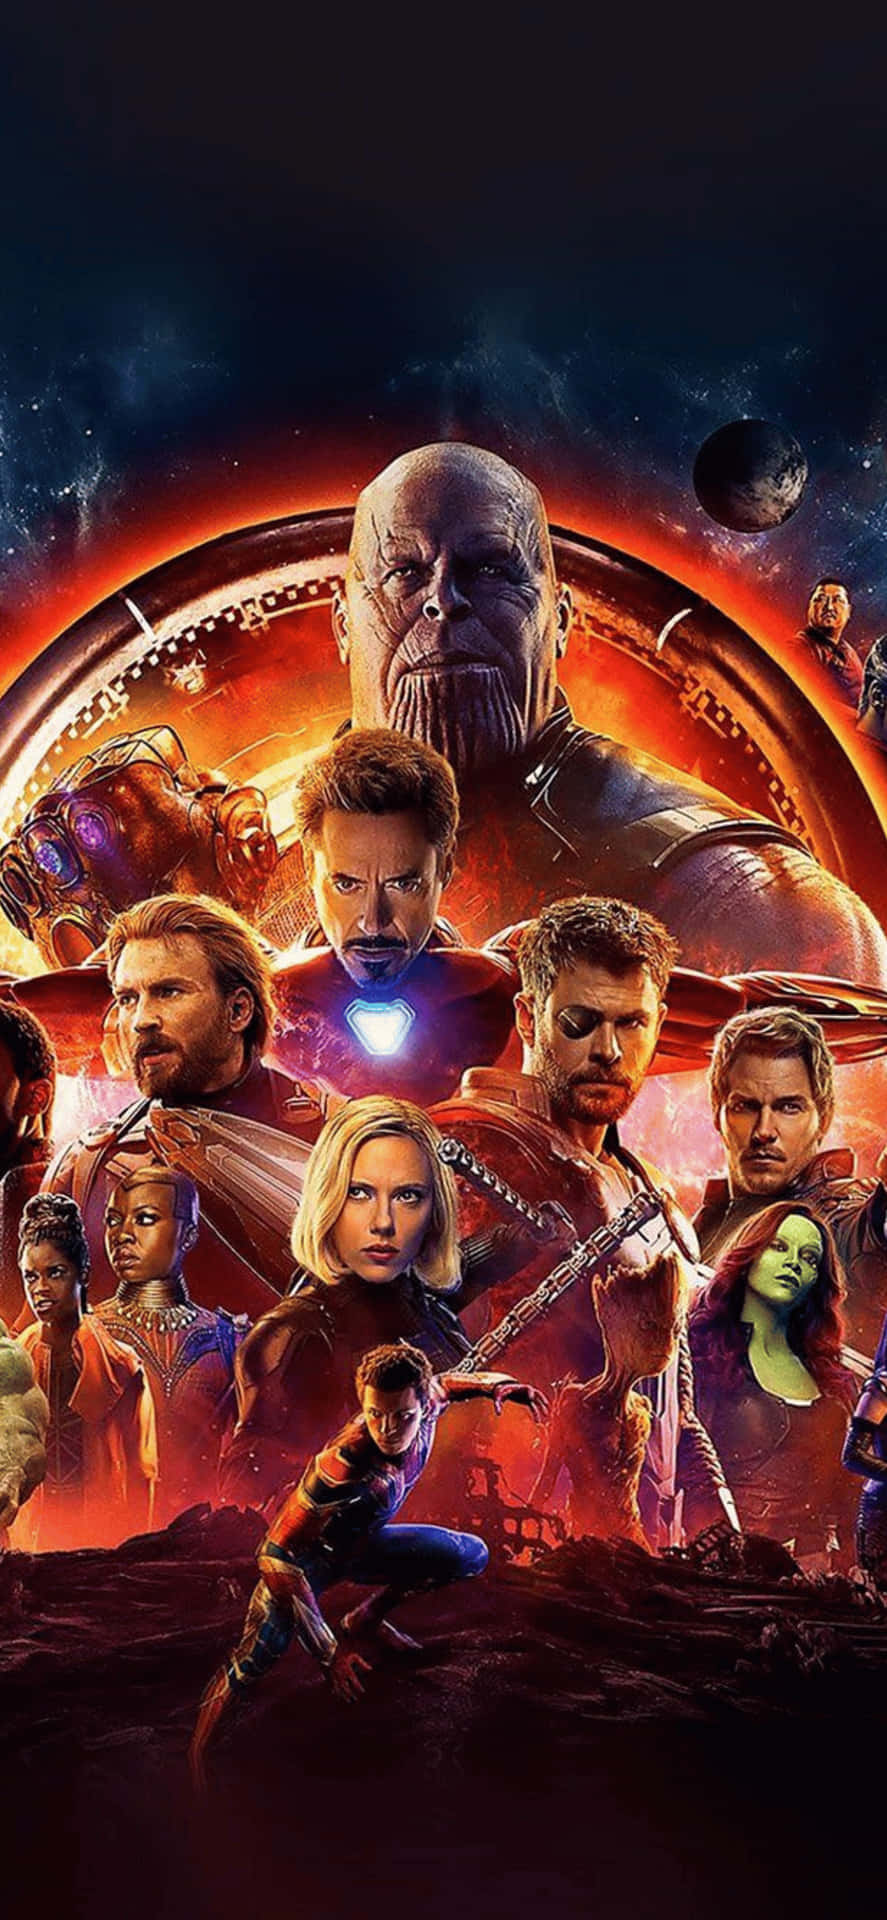 Iphonexs Max Bakgrund Med Marvel Avengers Infinity War Motiv.